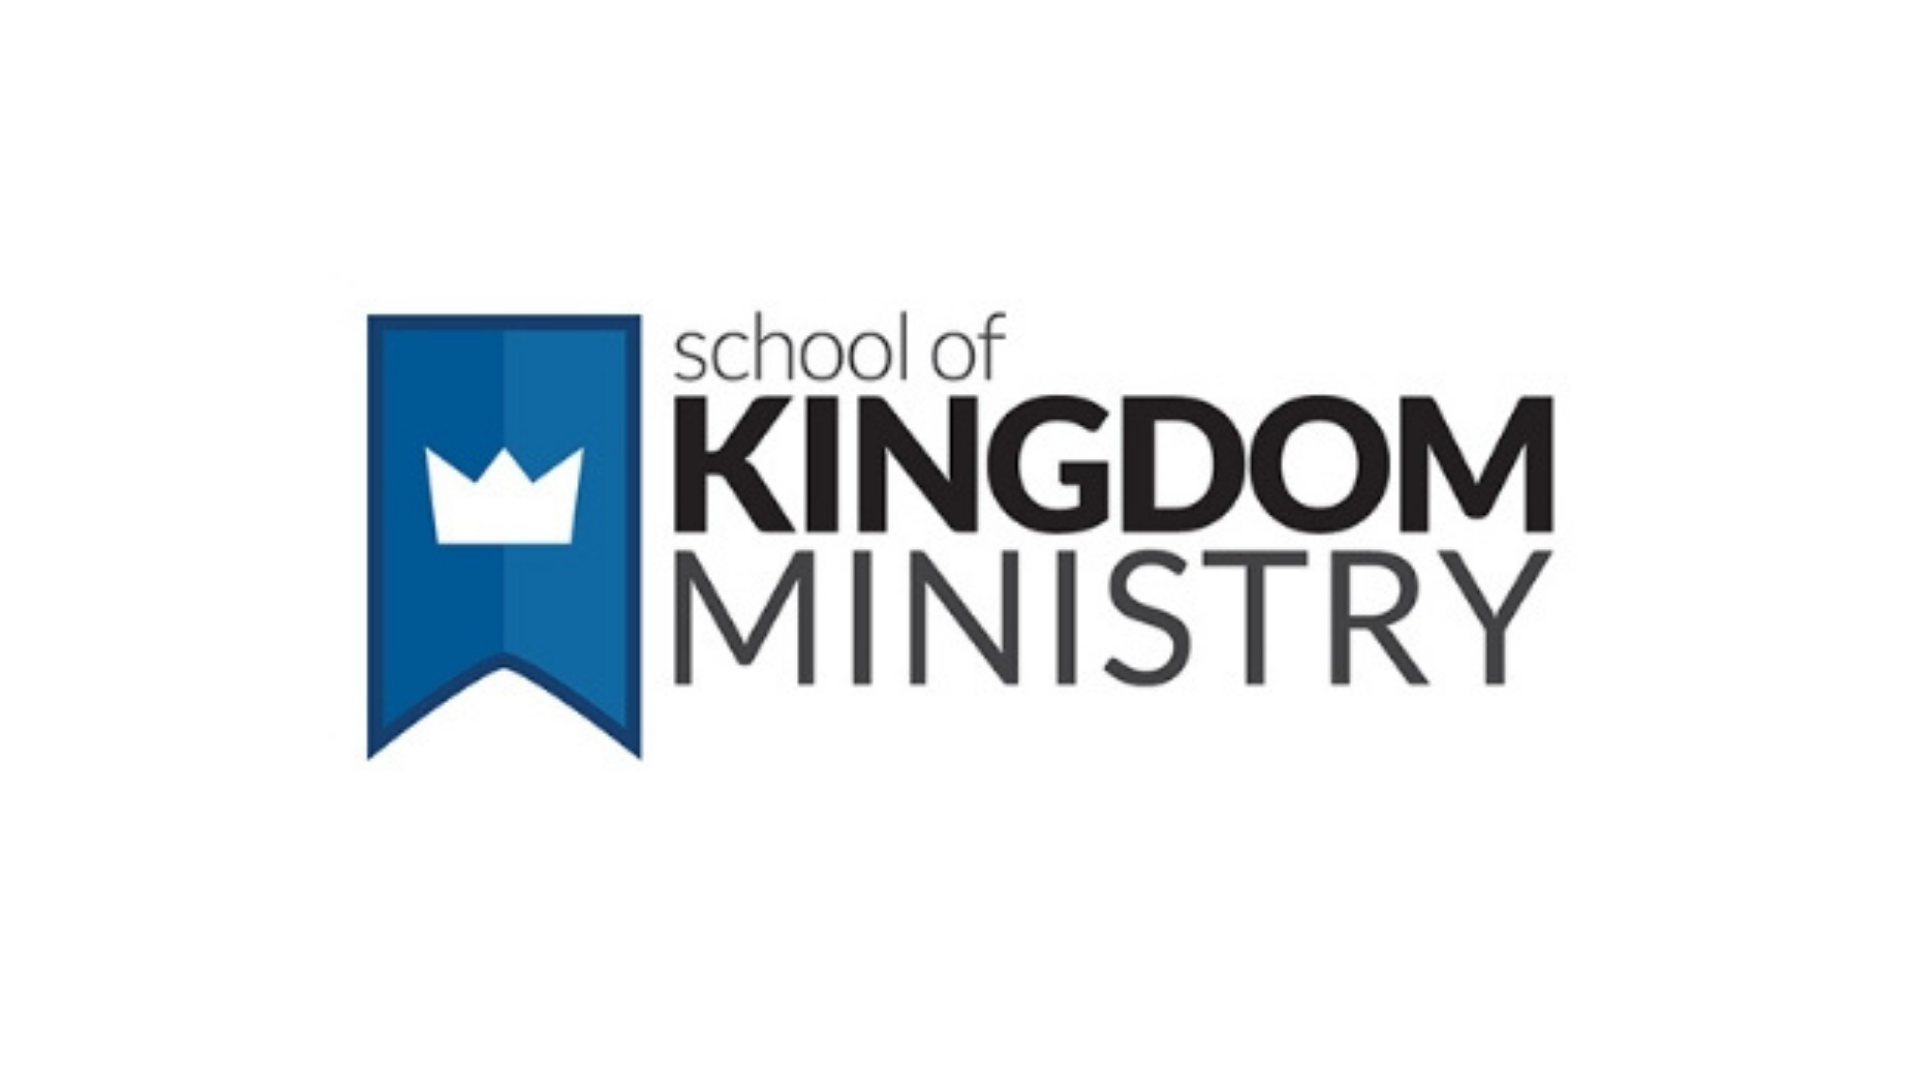 School of Kingdom Ministry